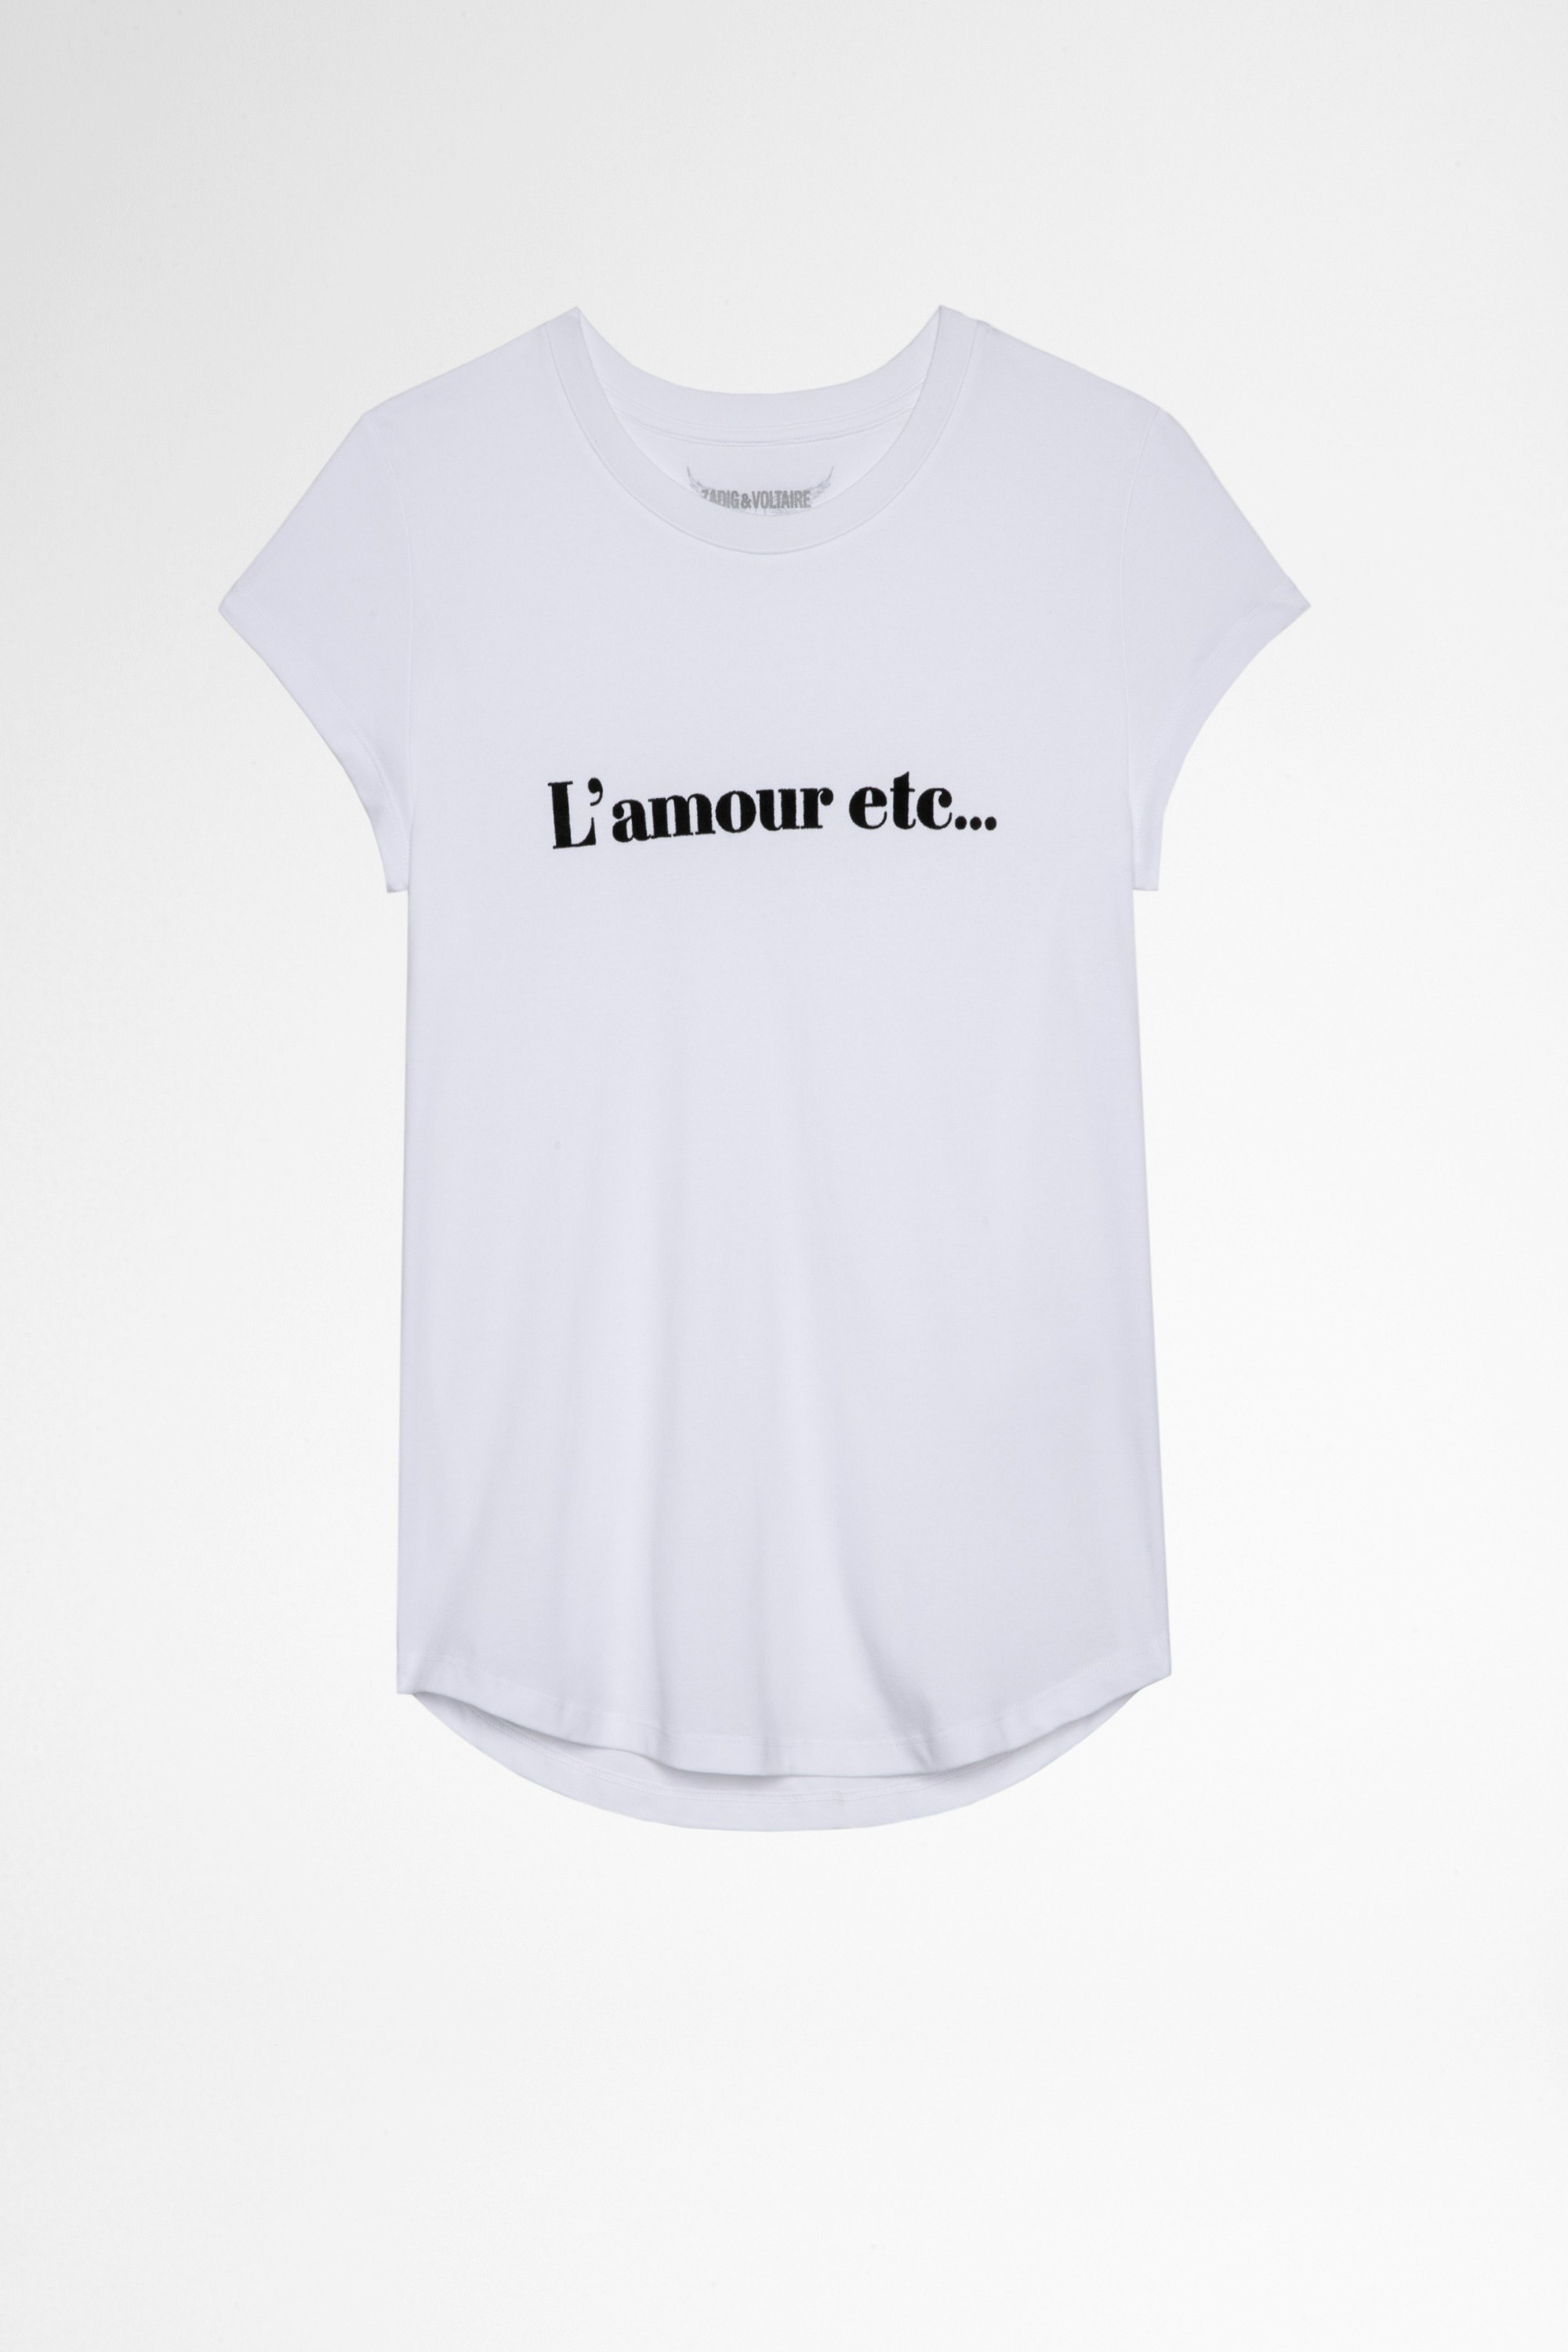 T-shirt Woop L‘Amour etc T-shirt aus weißer Baumwolle L‘Amour etc. Damen